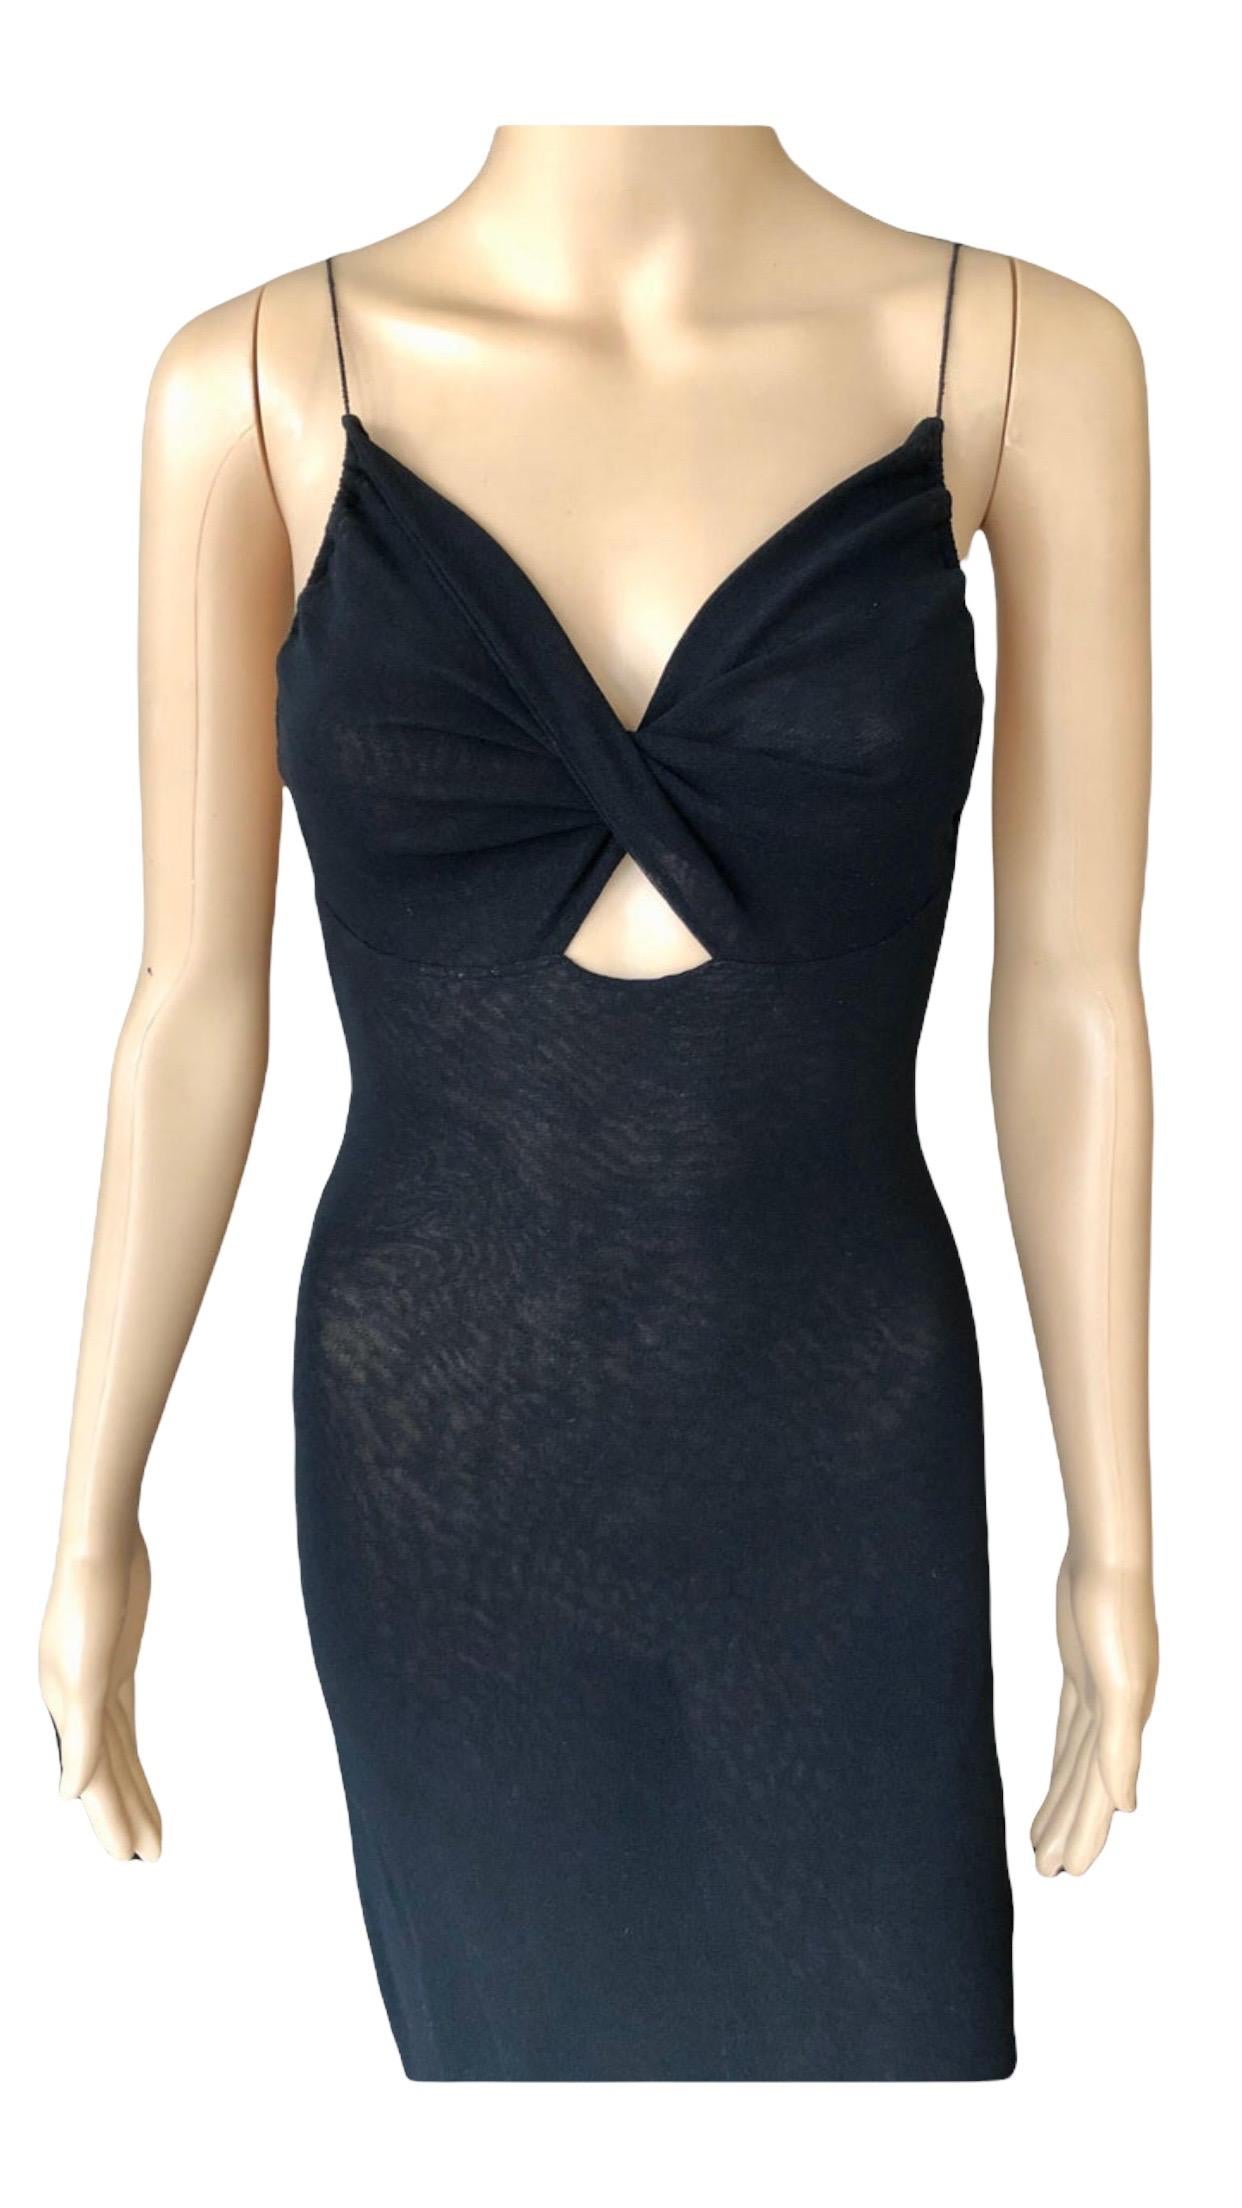 Jean Paul Gaultier Soleil S/S 1999 Cutout Semi-Sheer Mesh Black Maxi Dress For Sale 3